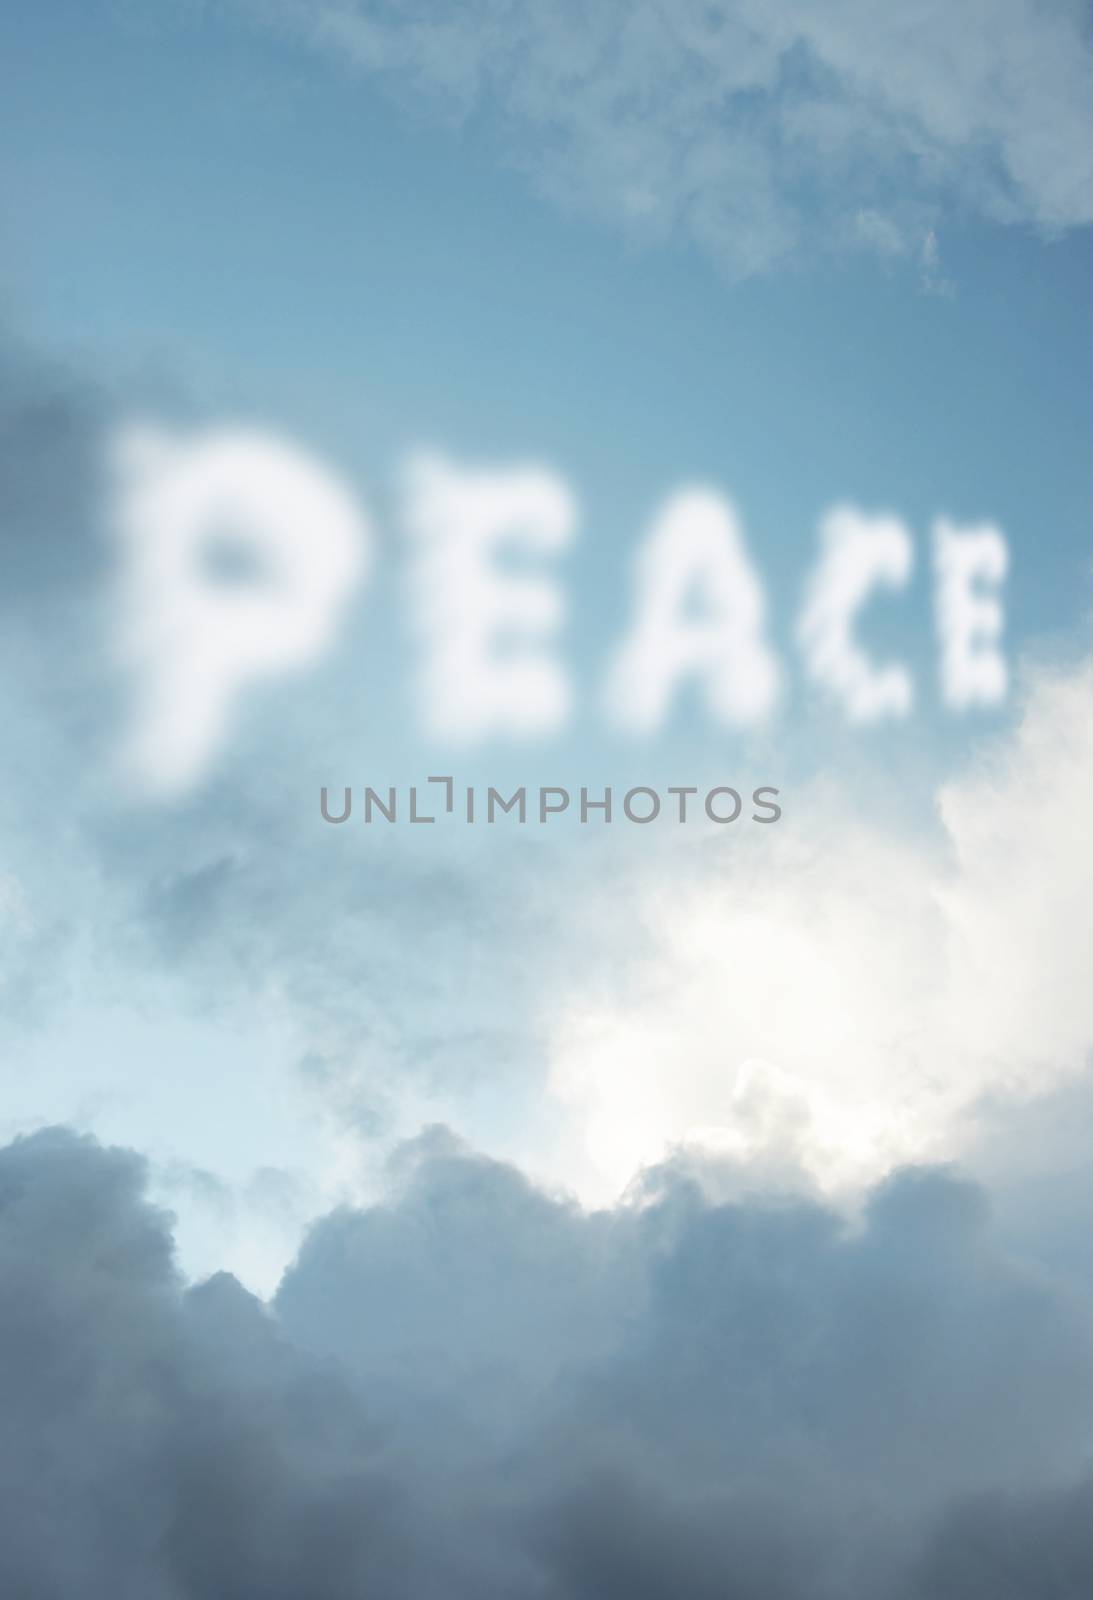 Peace by unikpix